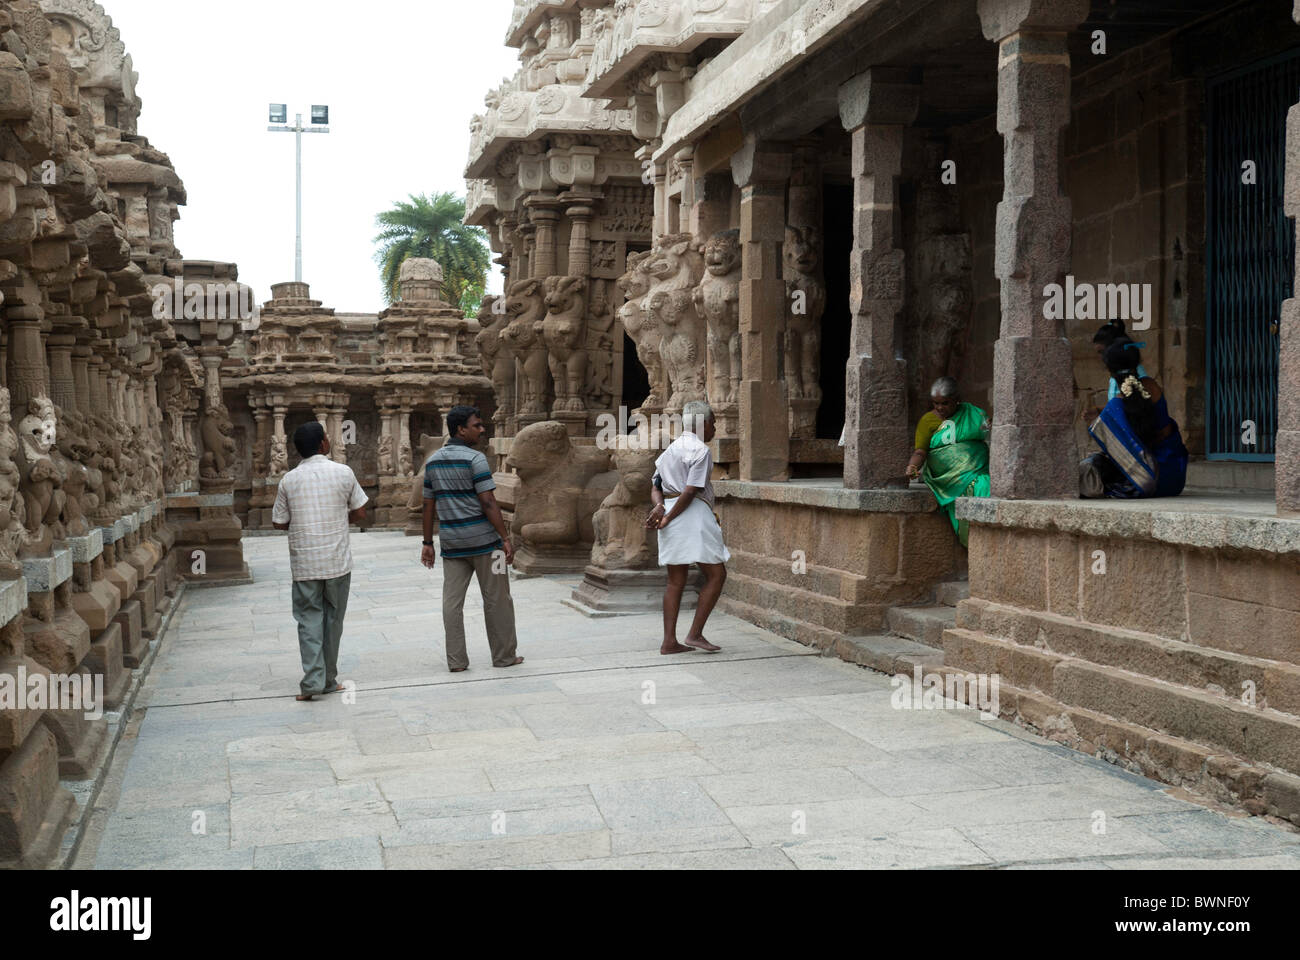 Kailasanatha temple construit par le roi Pallava Narasimhavarman et son fils Mahendra 8e siècle à Kanchipuram, Tamil Nadu, Inde. Banque D'Images